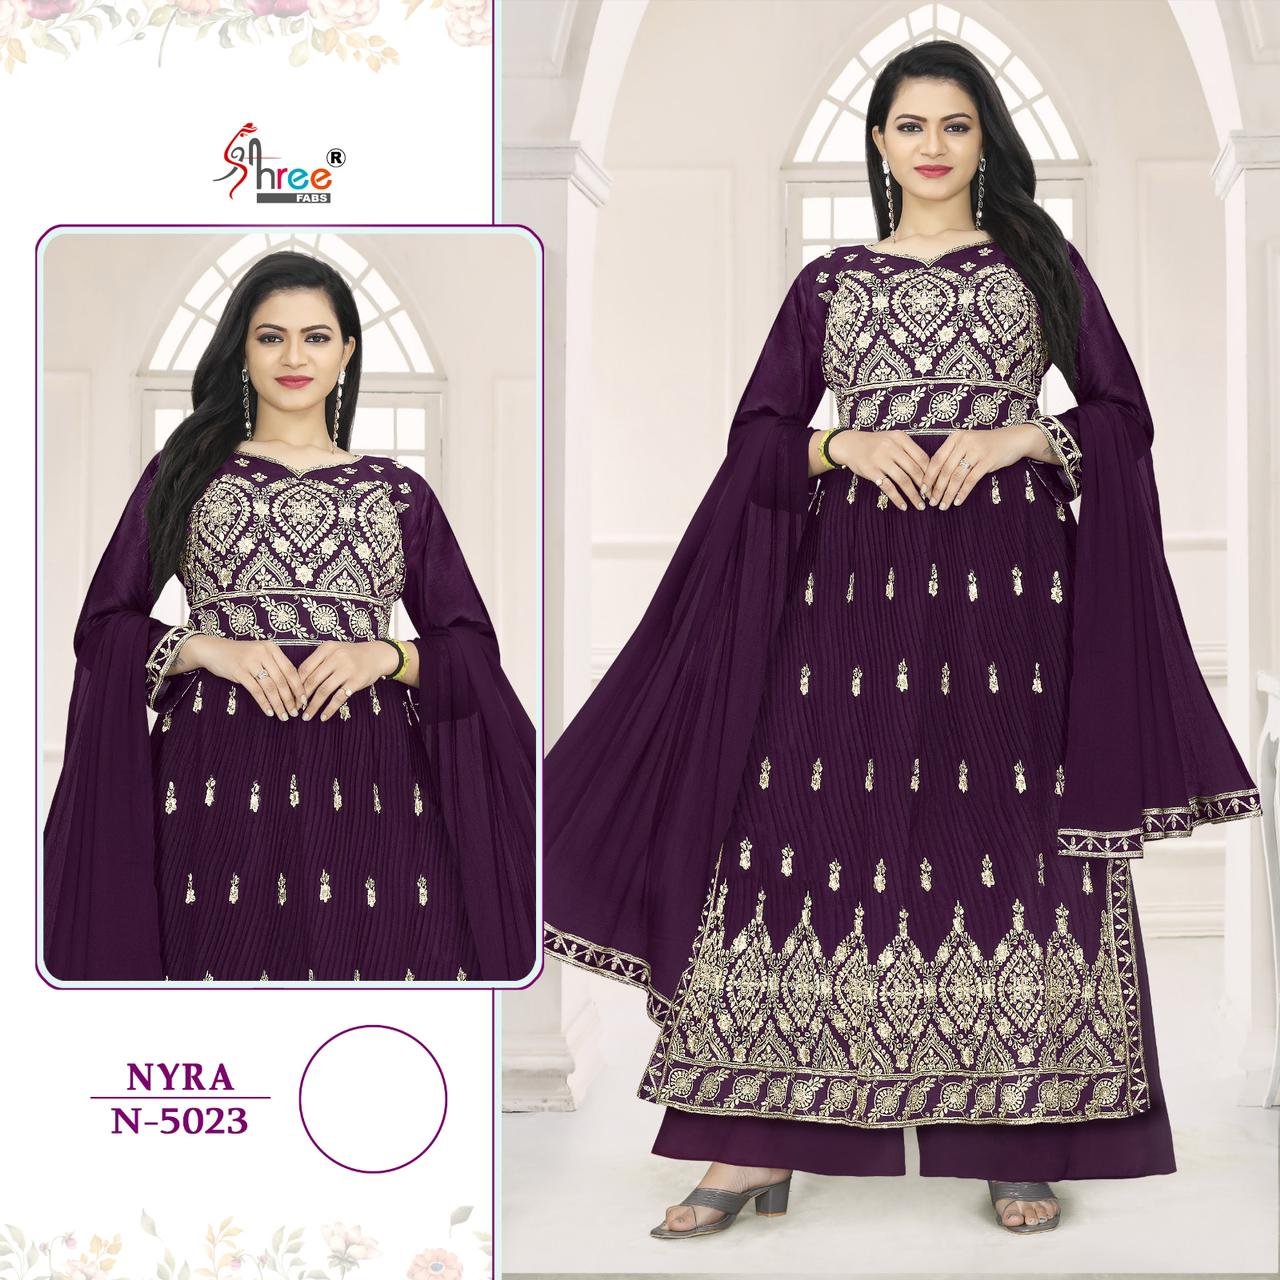 plus size one piece dresses online india -989126437 | Heenastyle